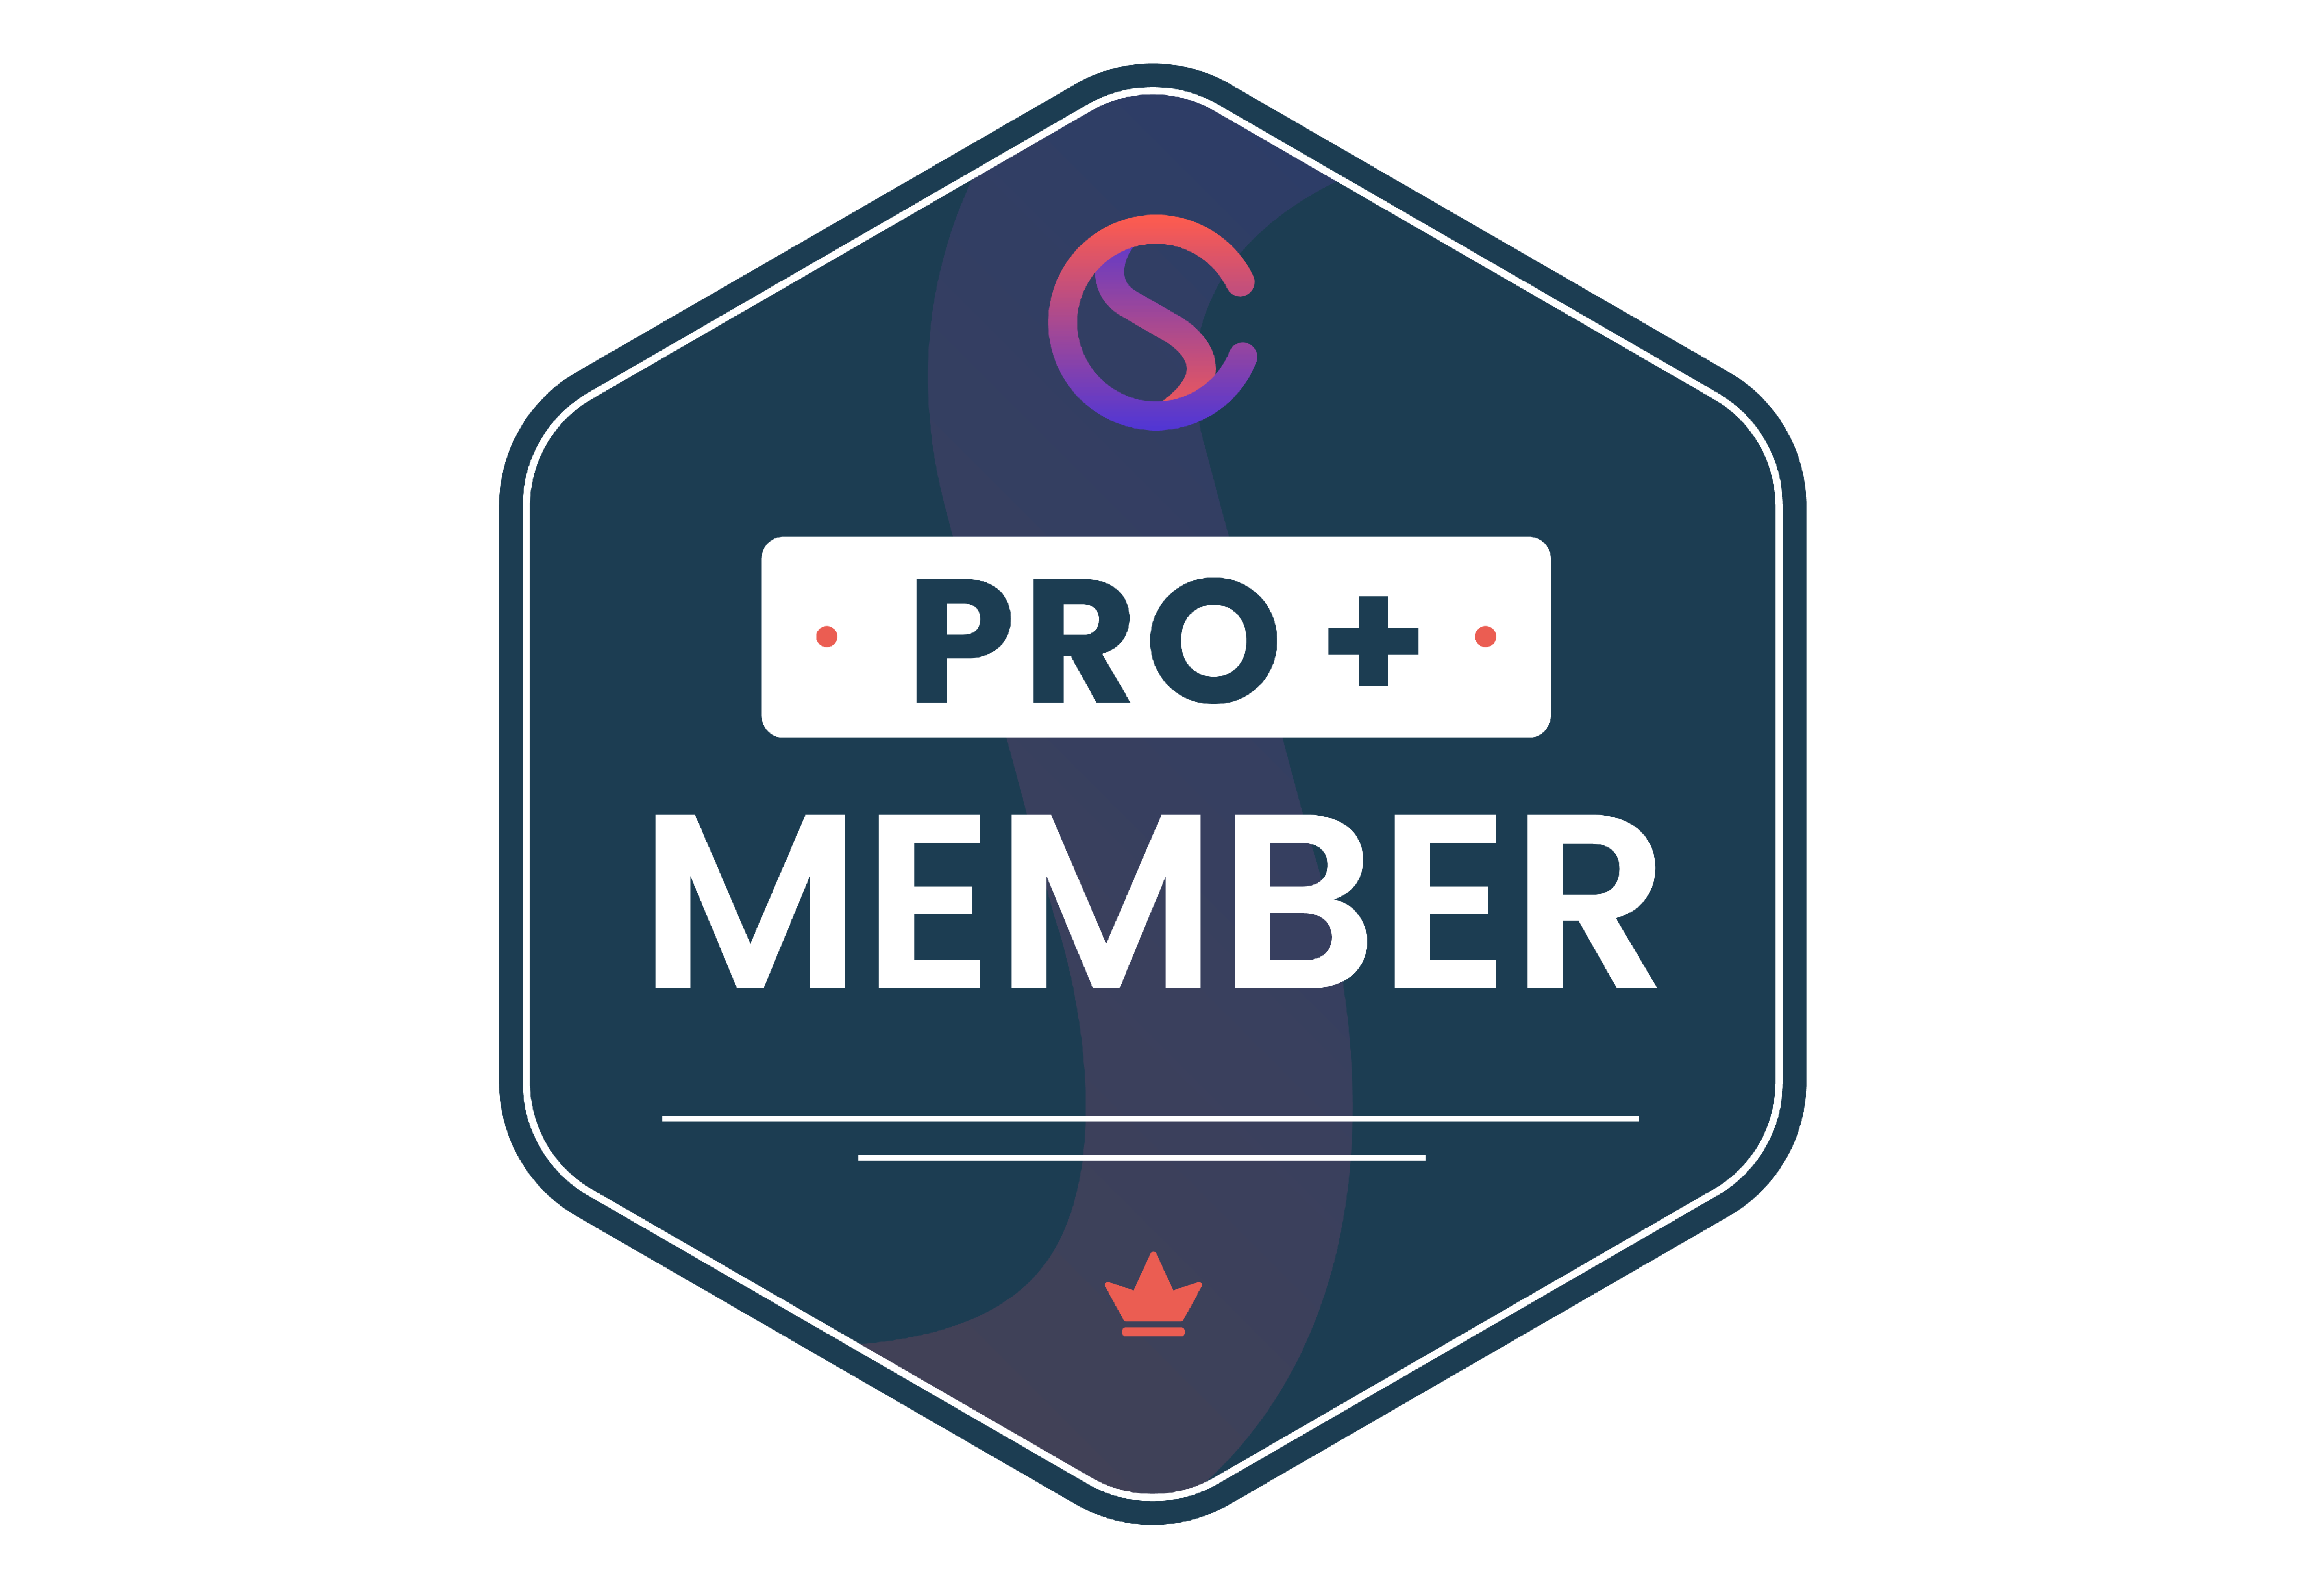 Pro+ membership badge